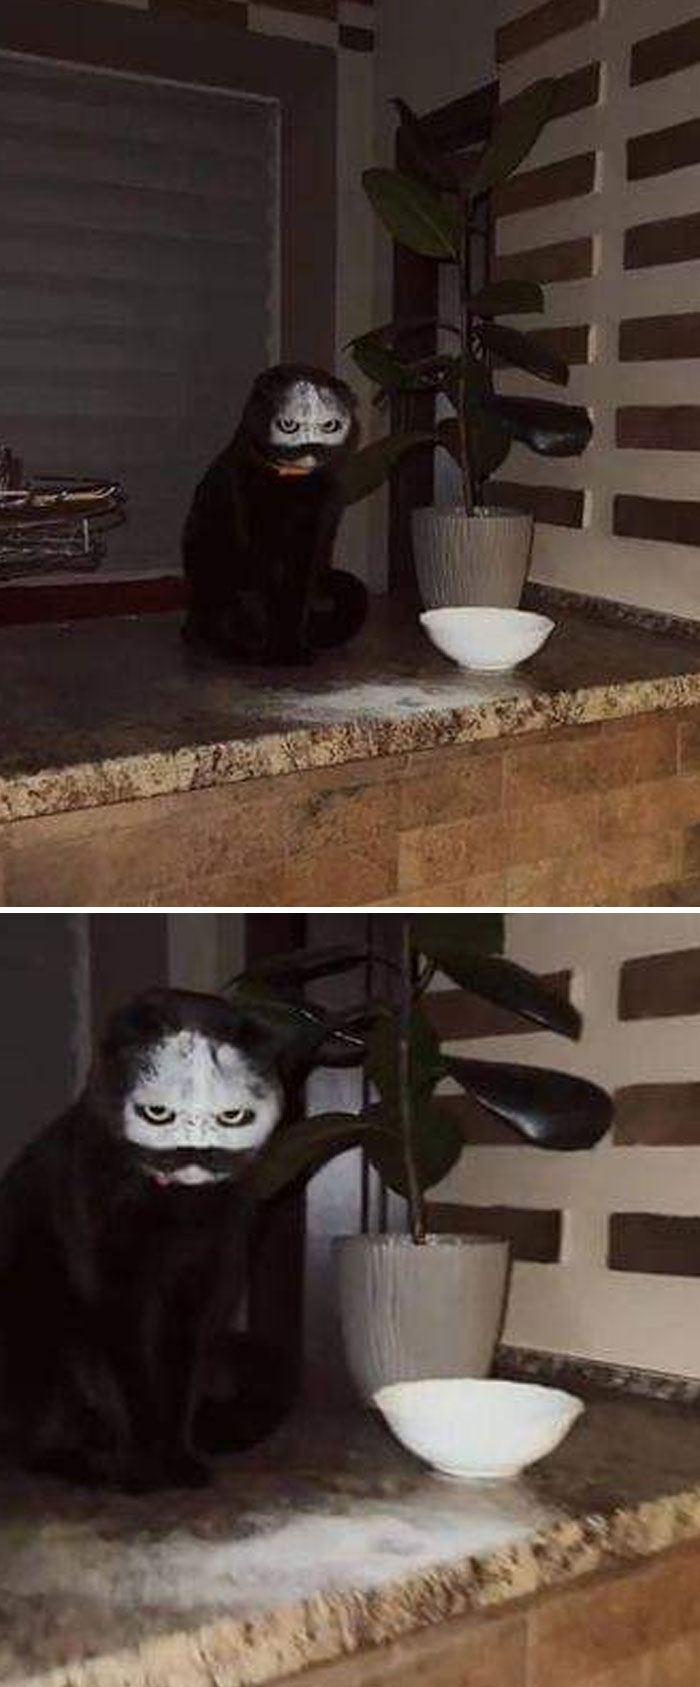 Cat Got Into A Bowl Of Flour